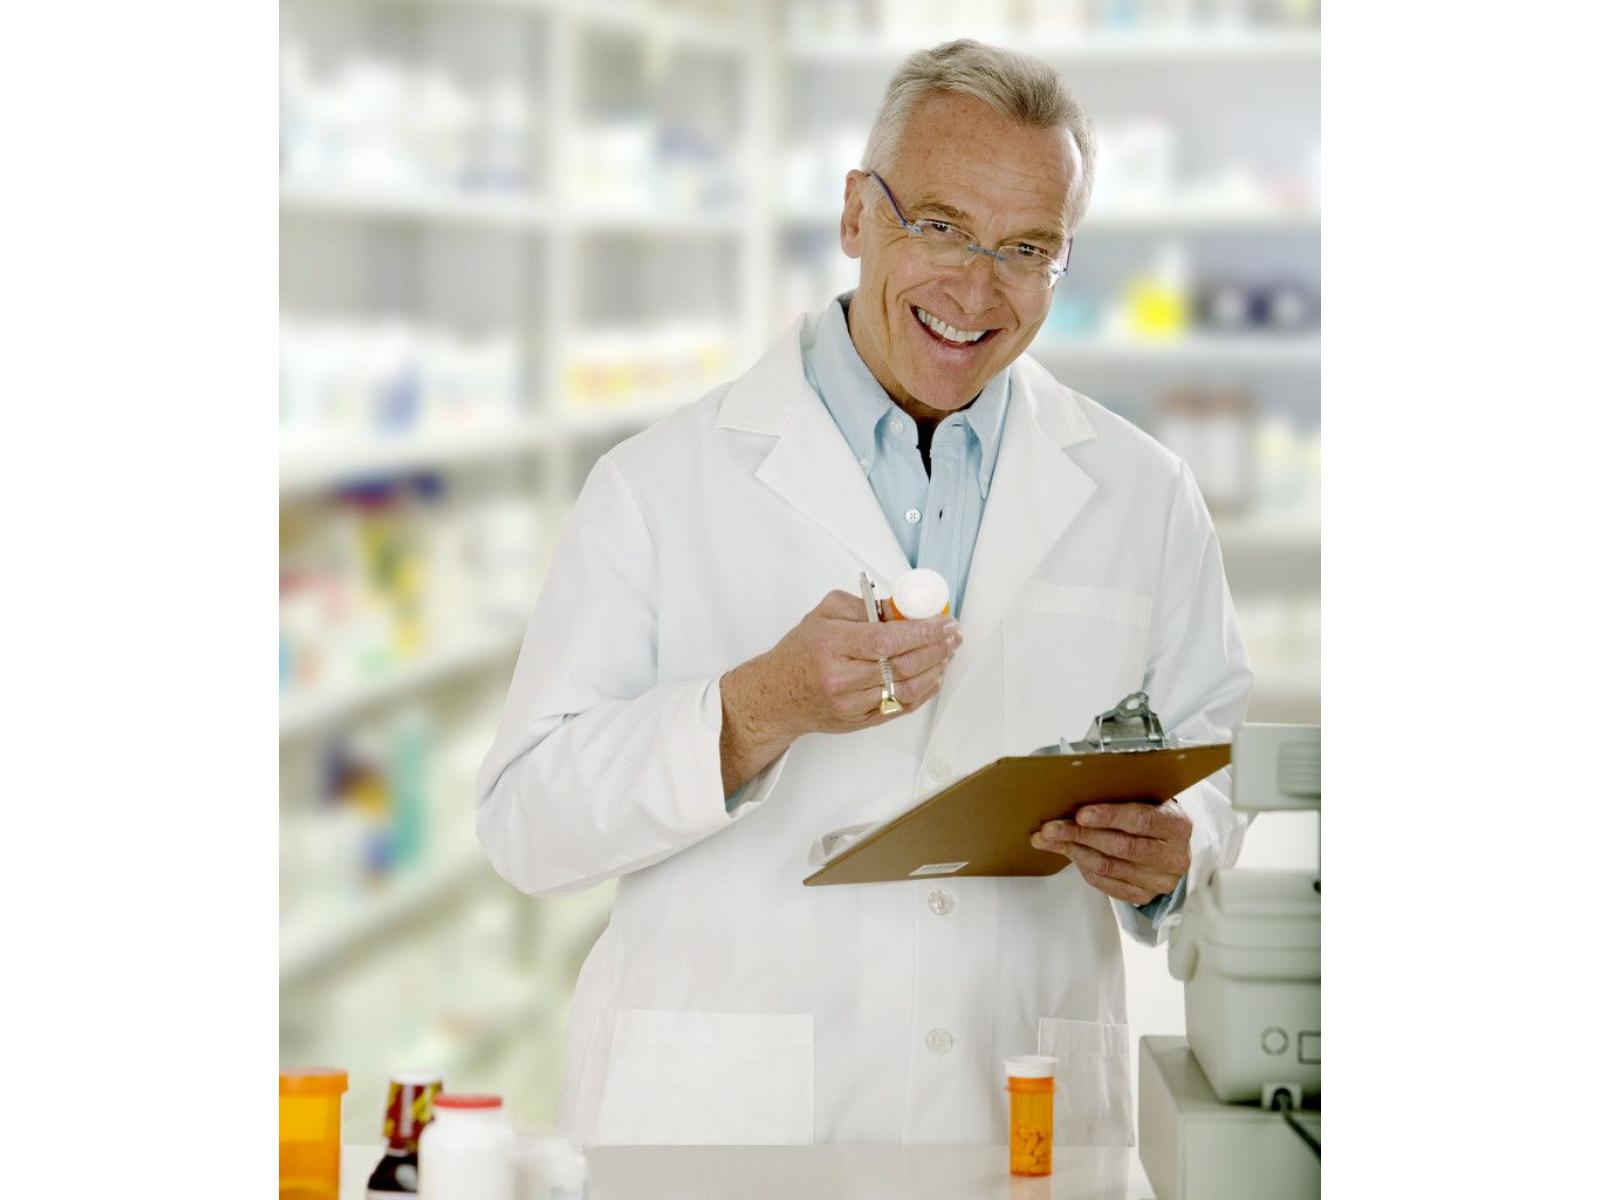 Pharma Care - Grija pentru sanatatea ta! - pharmacist.jpg